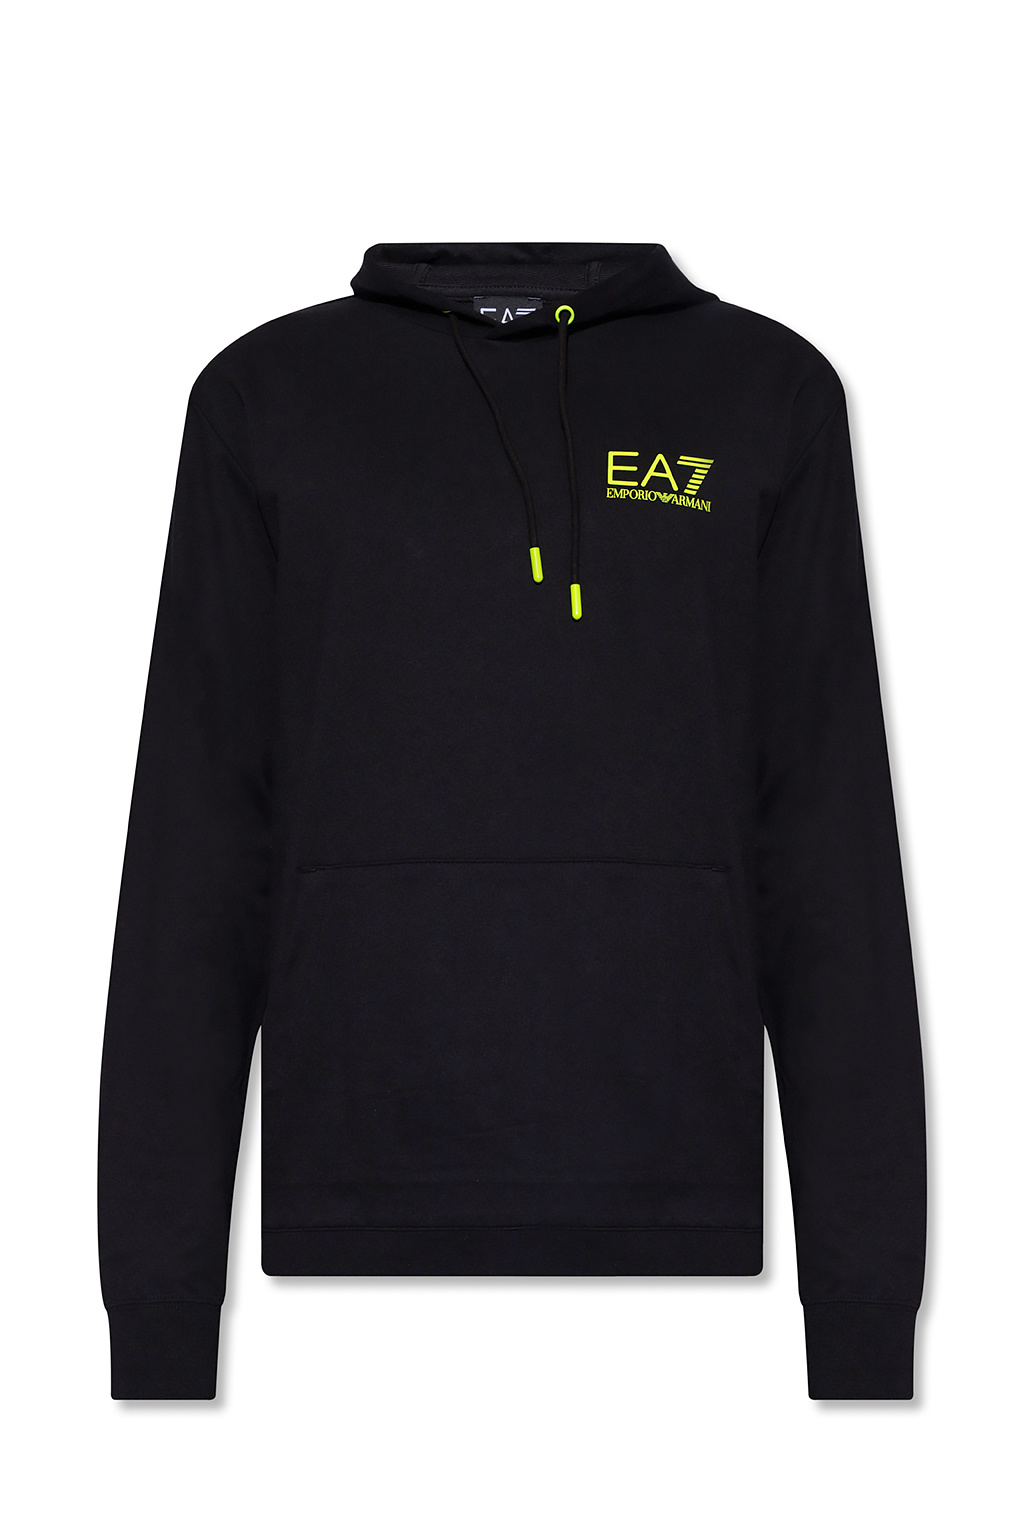 EA7 Emporio blazer armani Logo-printed hoodie